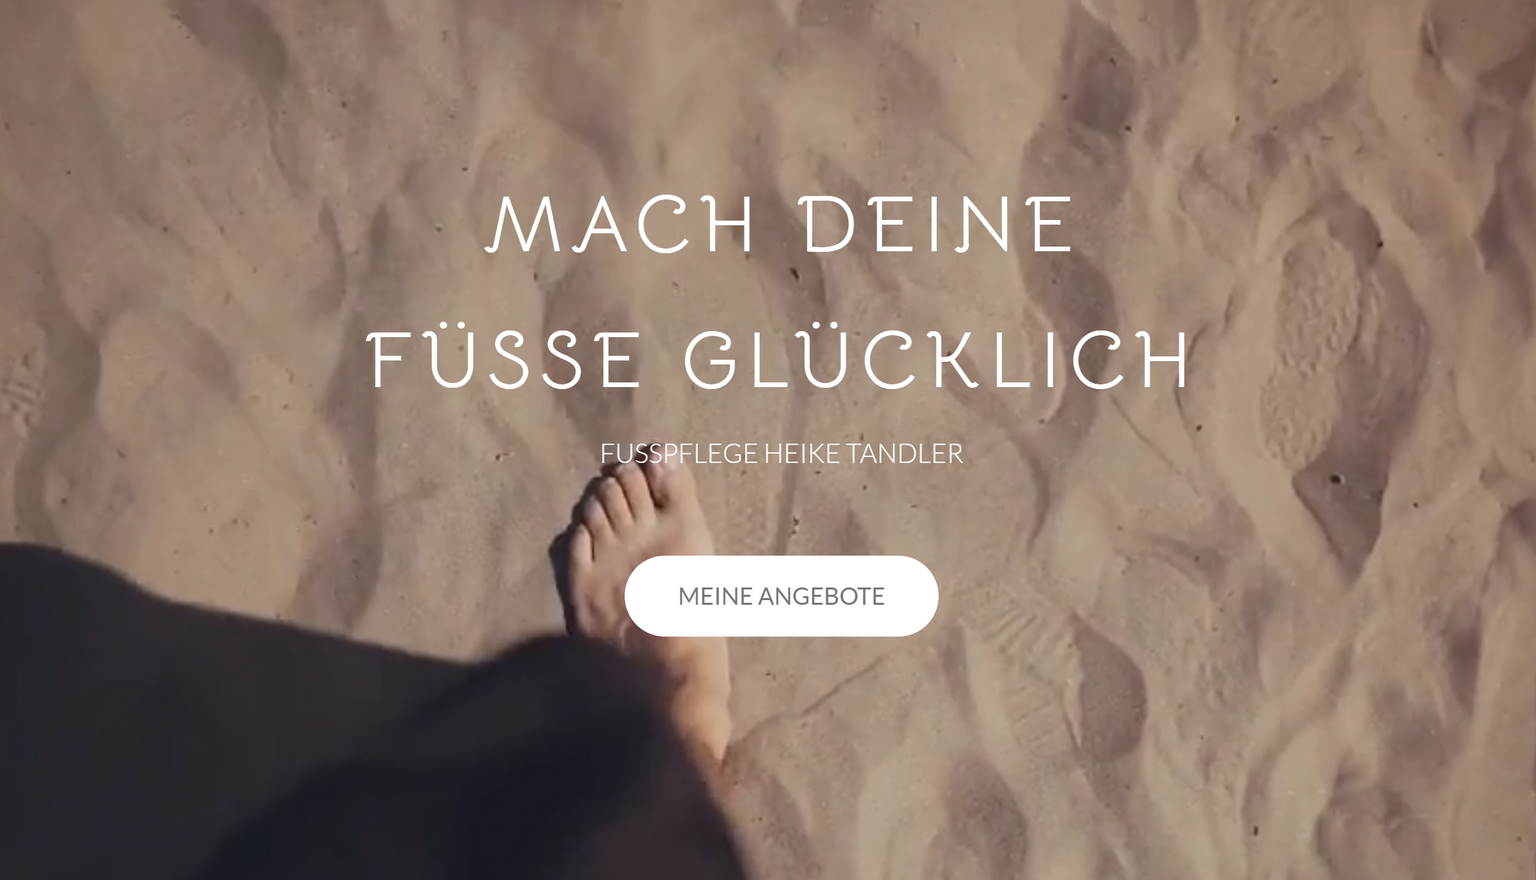 Screenshot of the beginning of the website fusspflegetandler.de